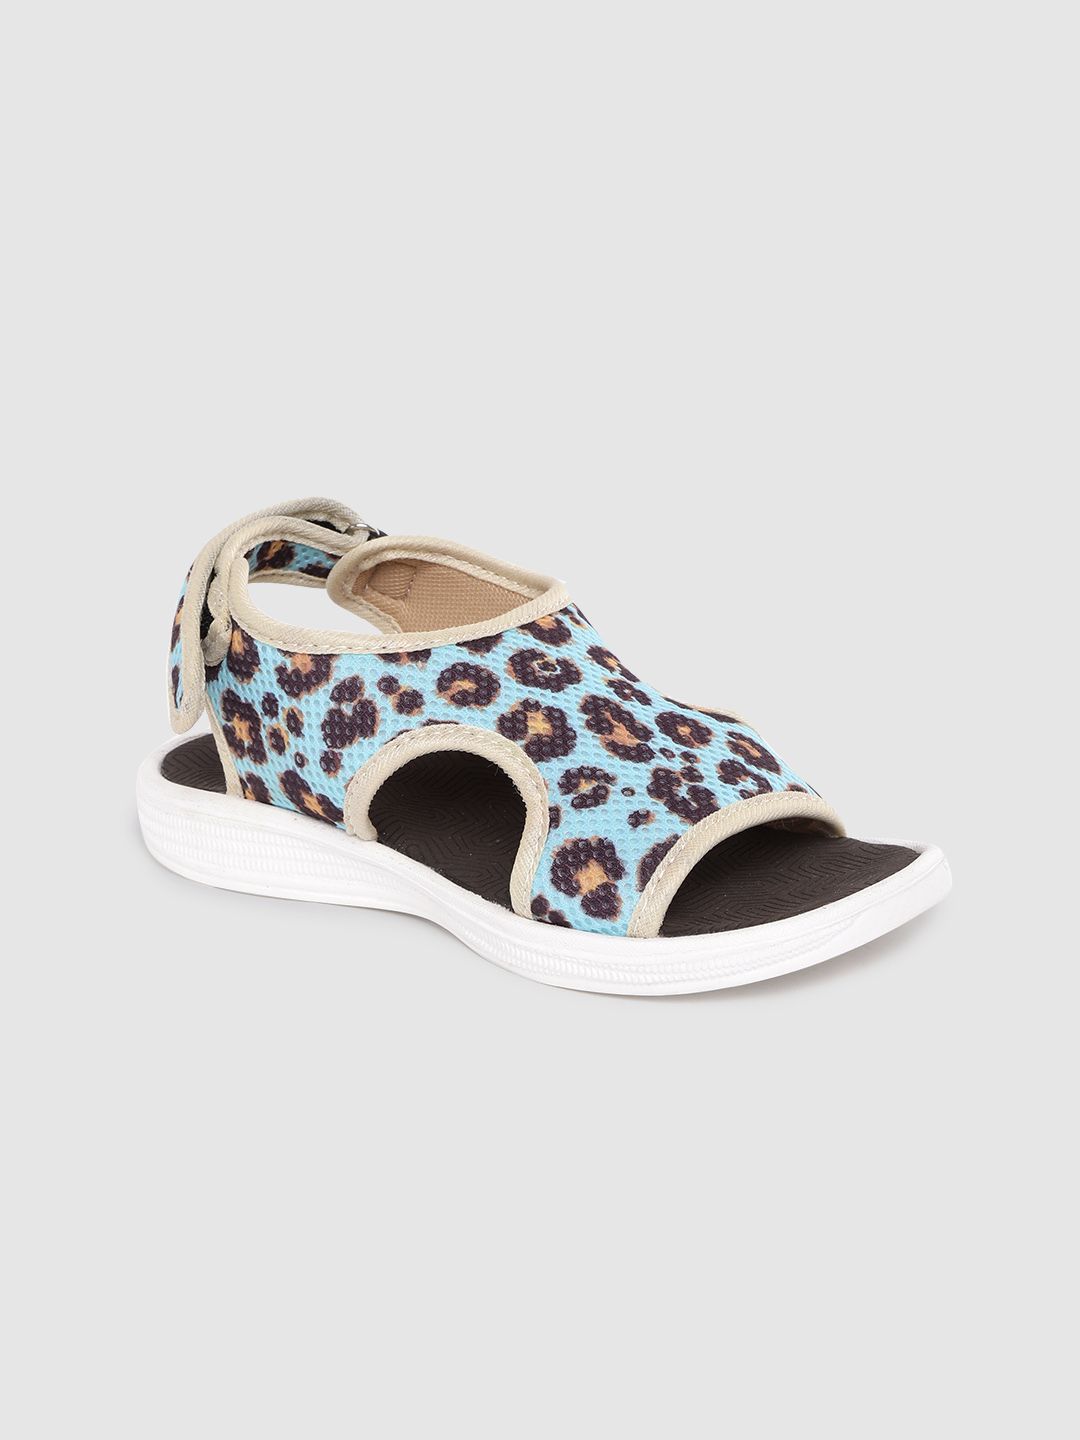 Kook N Keech Women Blue & Coffee Brown Leopard Print Sports Sandals Price in India